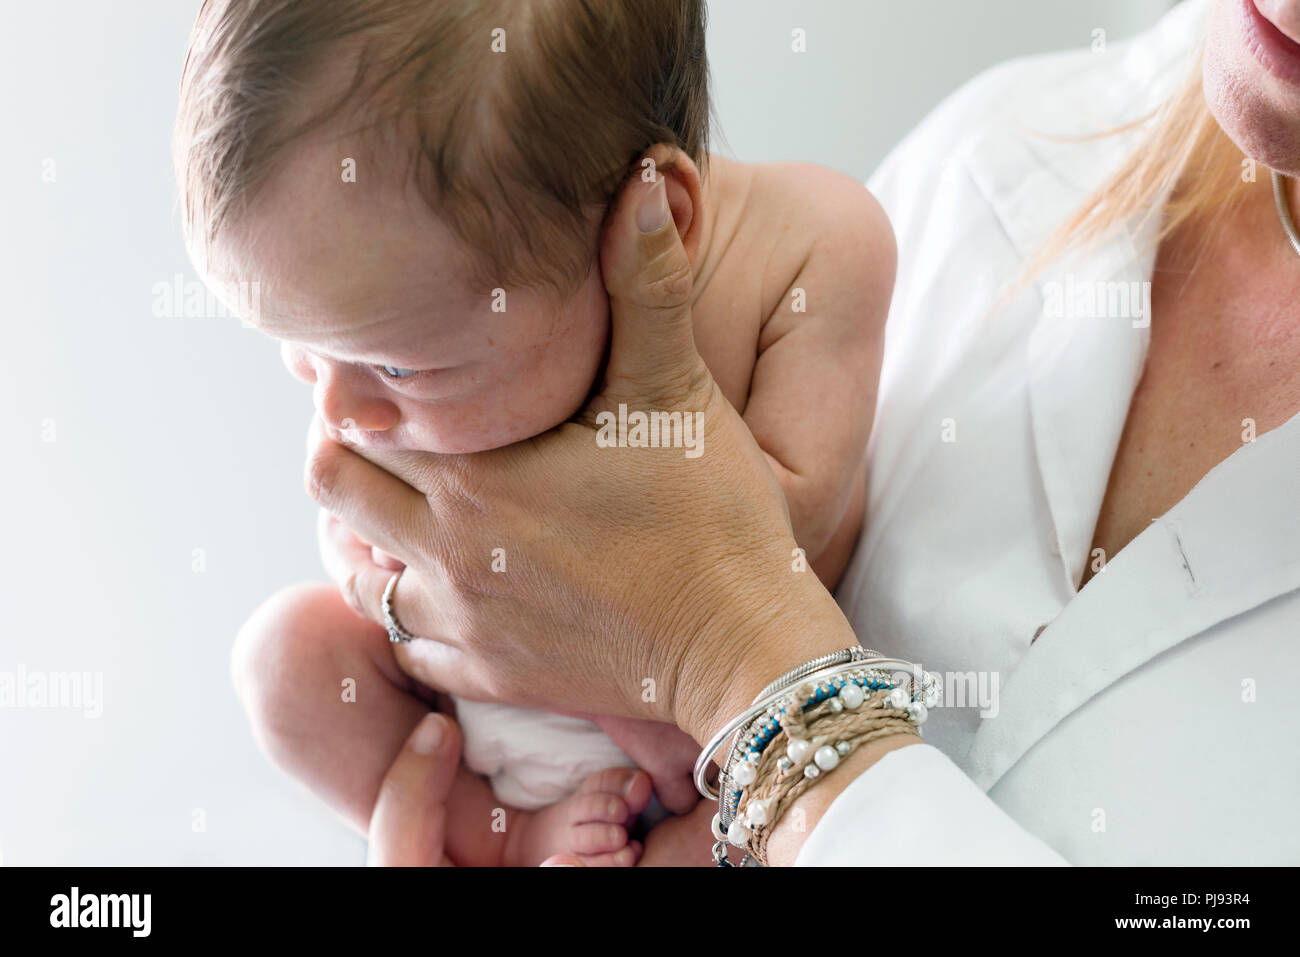 Newborn baby boy looking aside kept by the nurse in white uniform Stock Photo